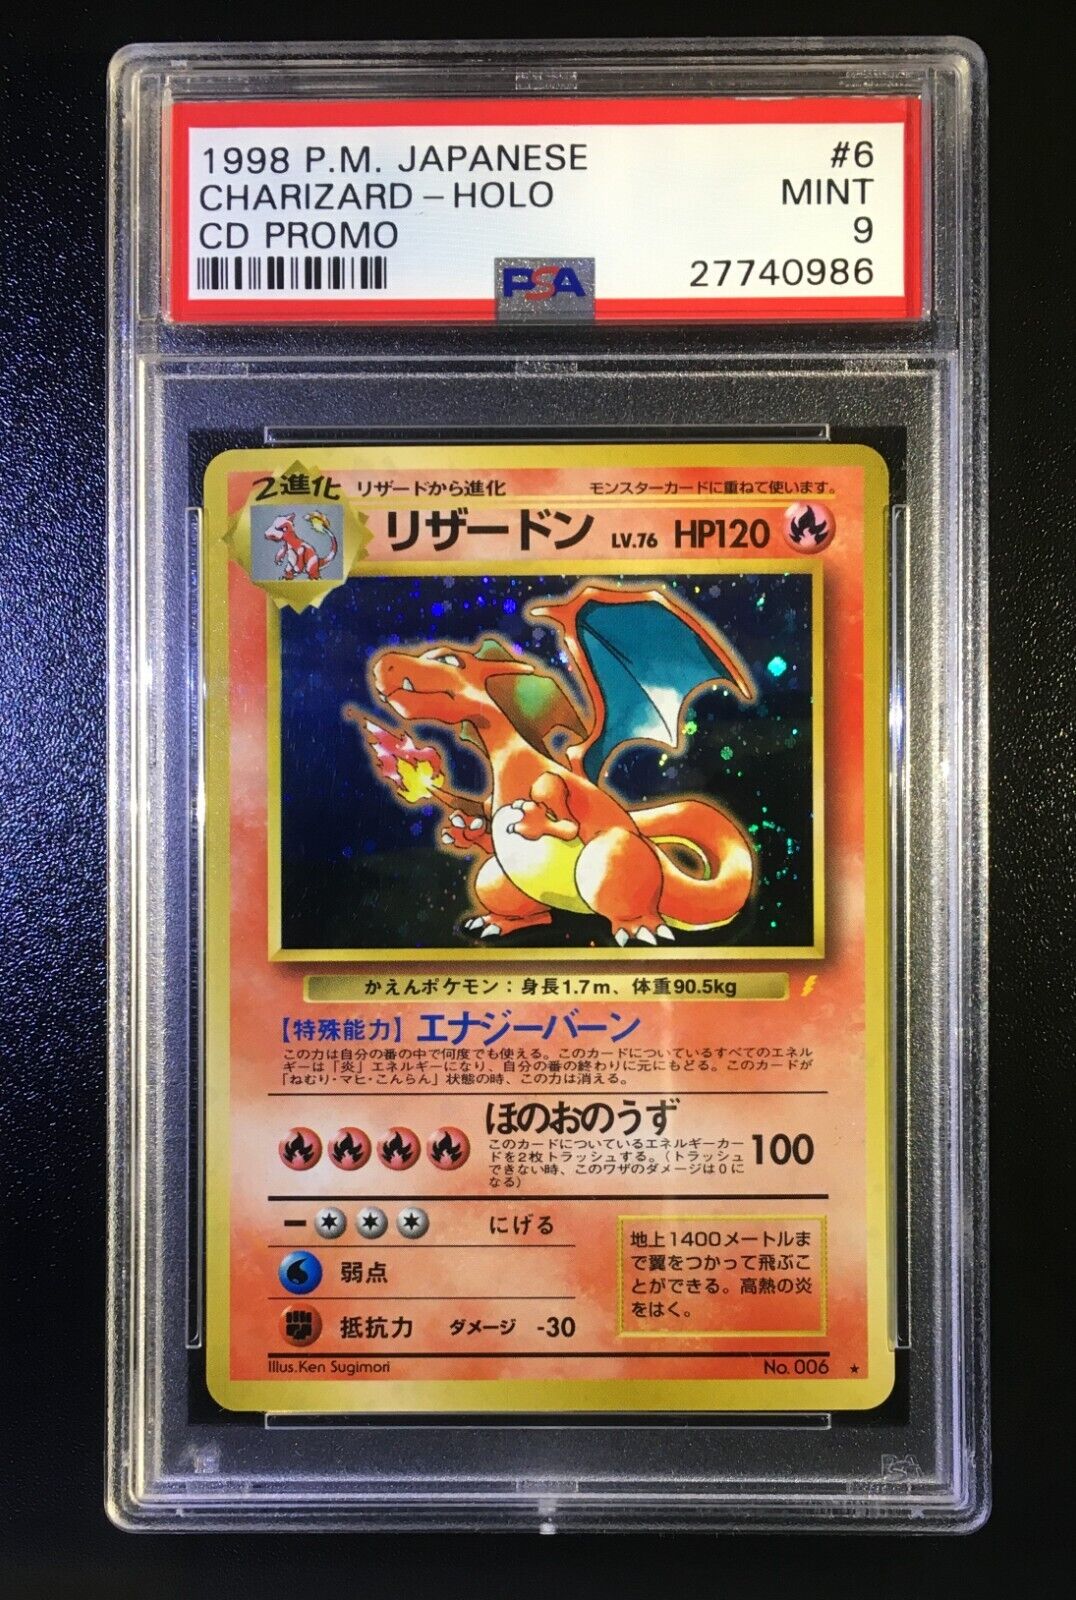 Charizard - Pokemon Card - No. 006 - Japanese CD Promo - Holo - PSA 9 Mint